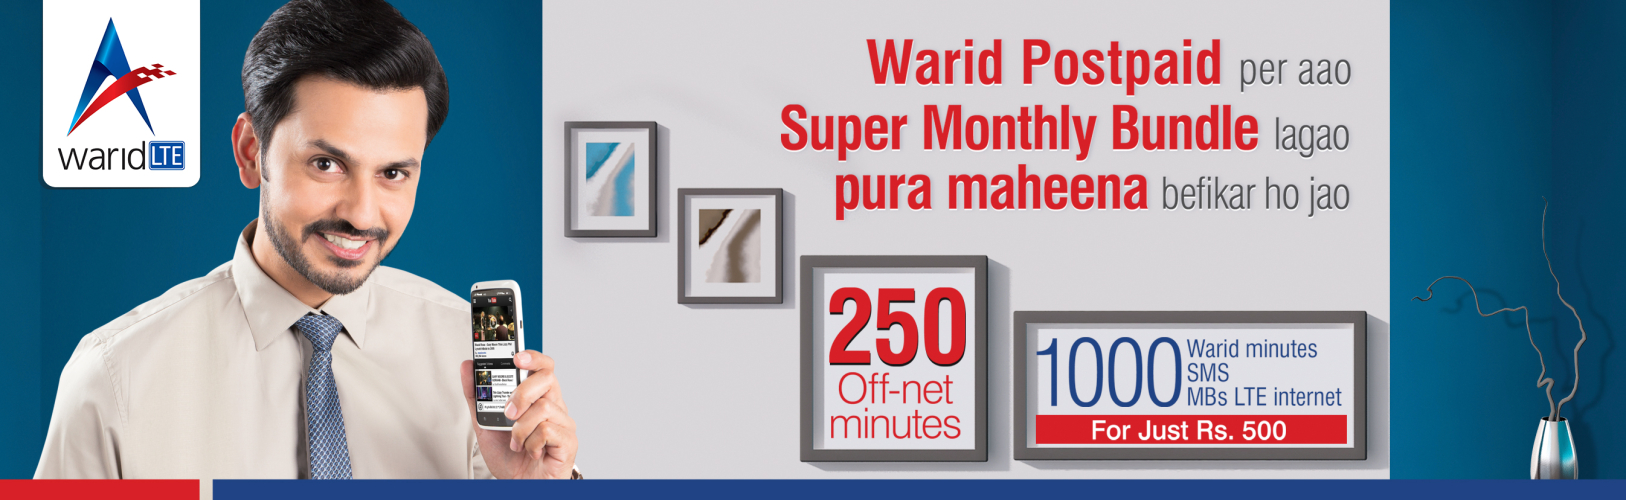 Warid-Postpaid-Super-Monthly-Unlimited-Bundle